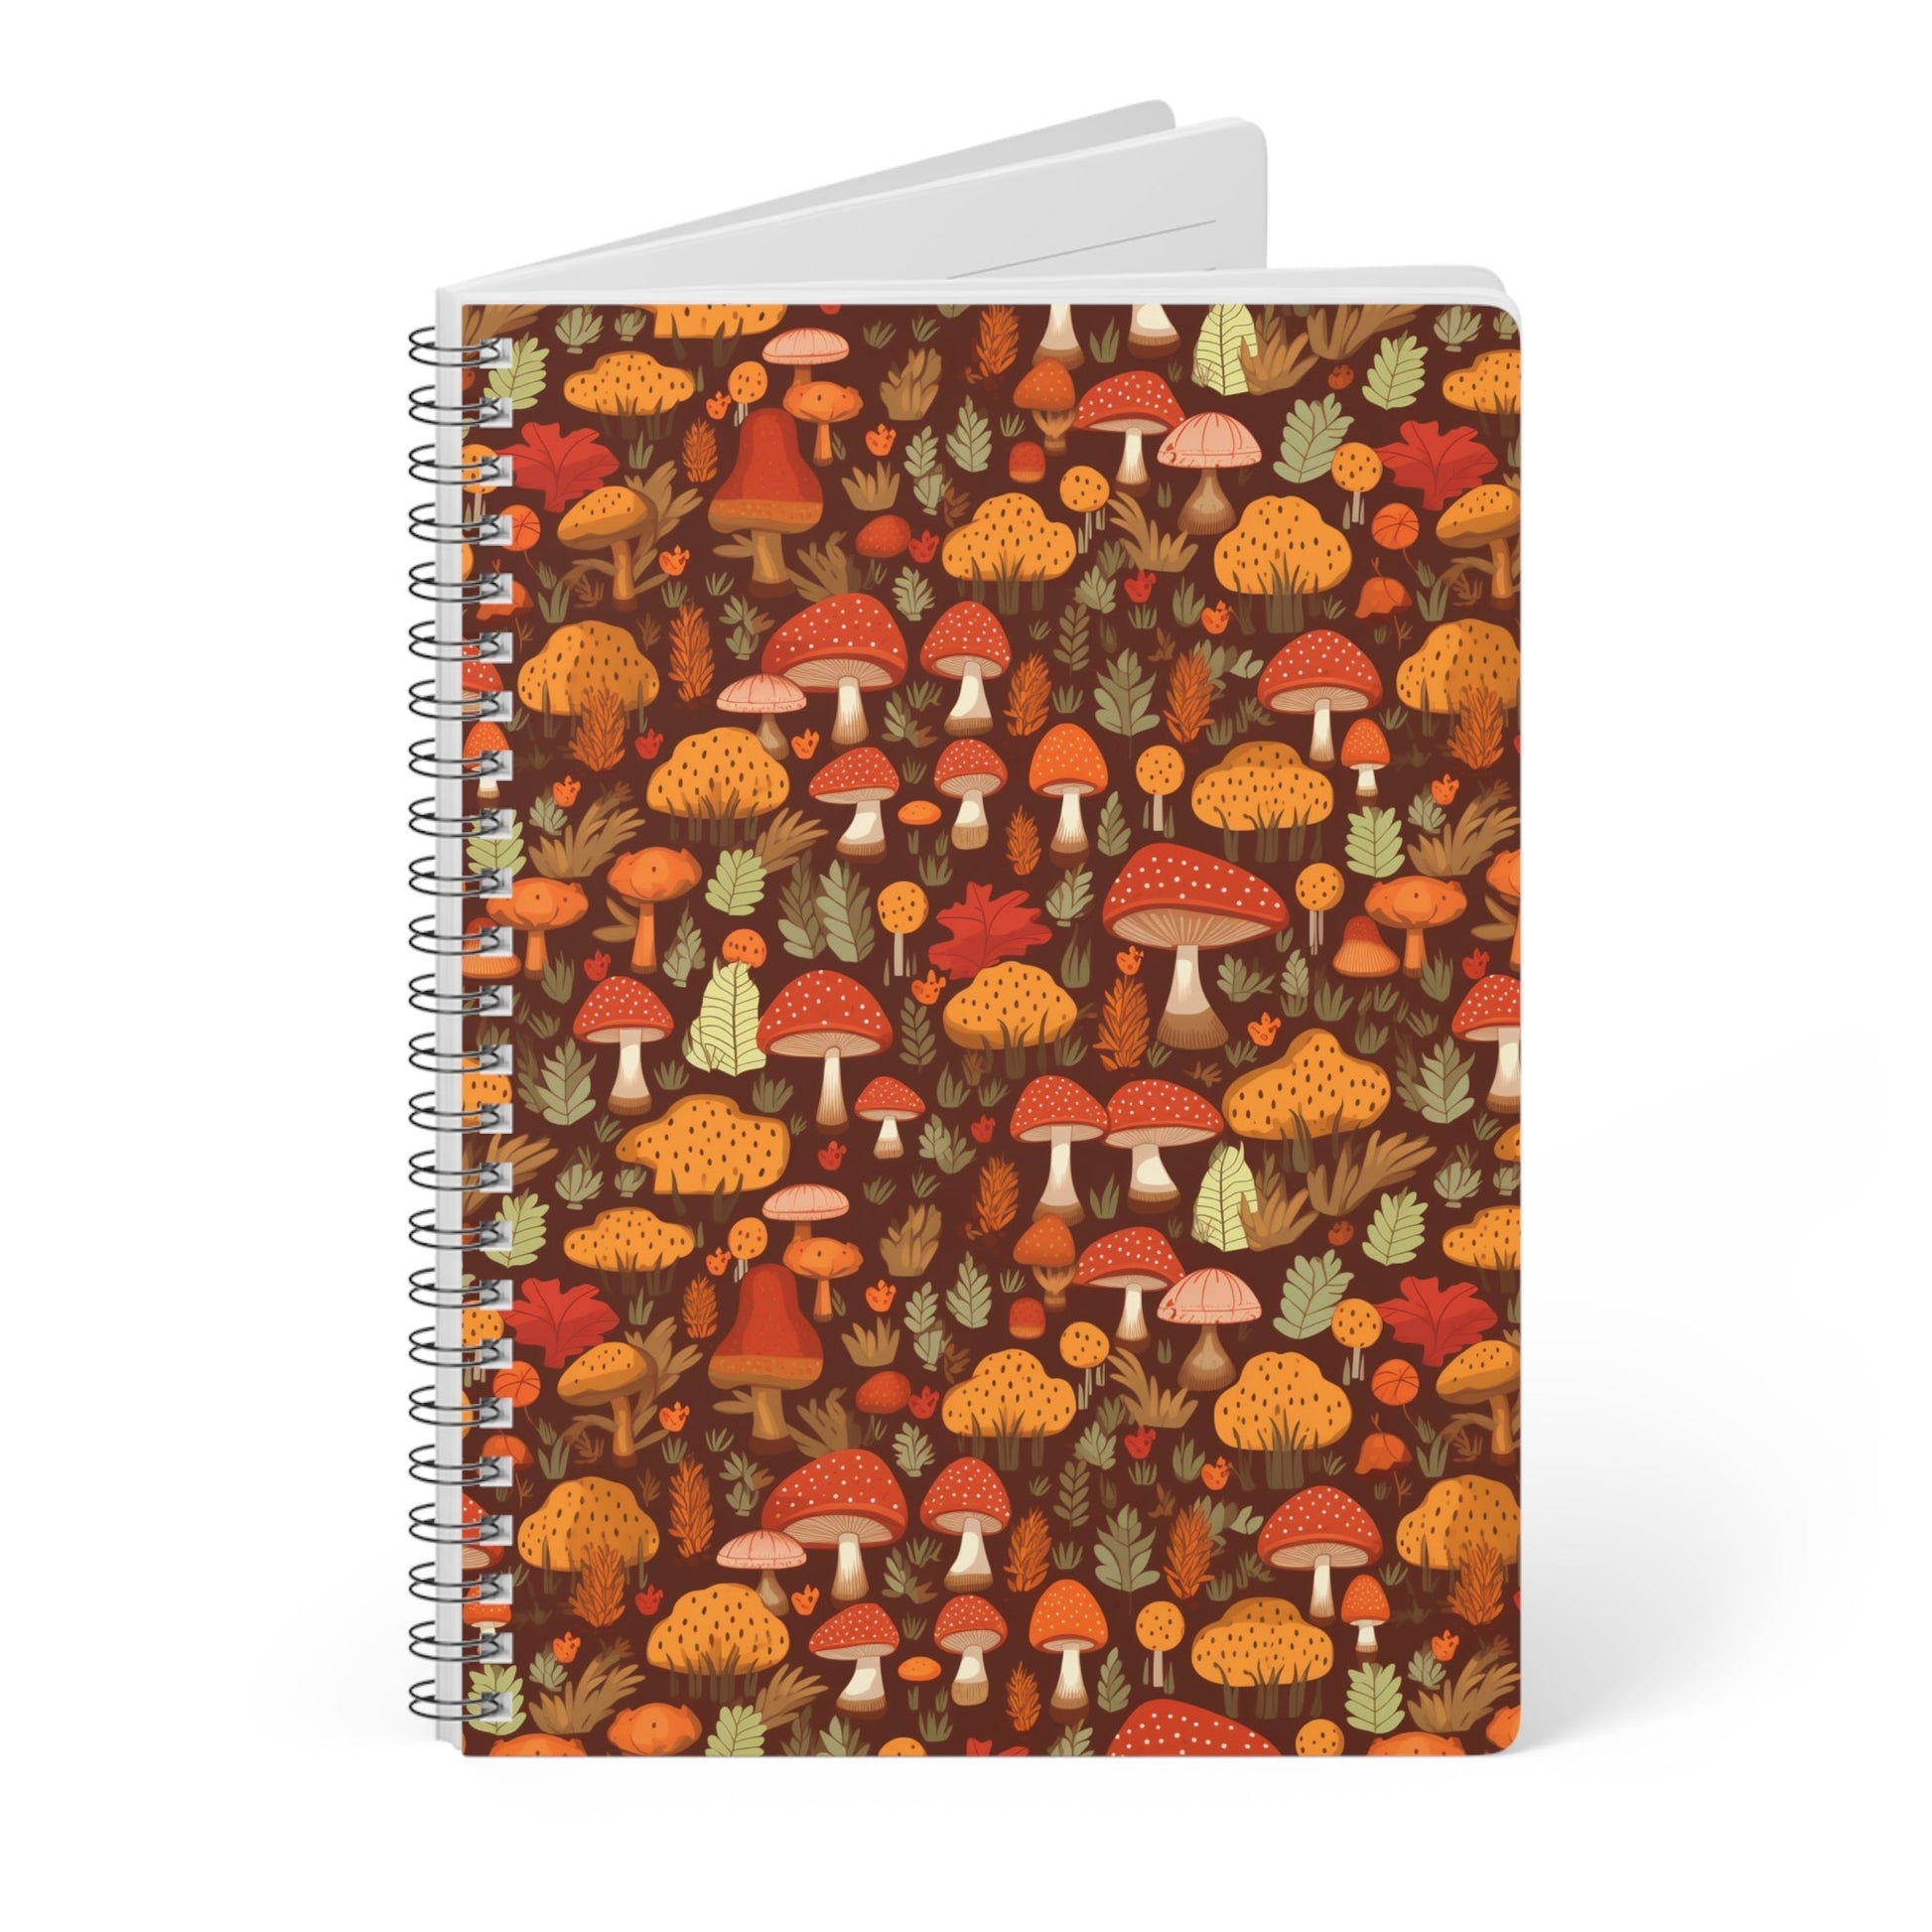 Autumn Spore Wonderland: Enchanting Mushroom and Leaf Designs - Notebook (A5) - Pattern Symphony